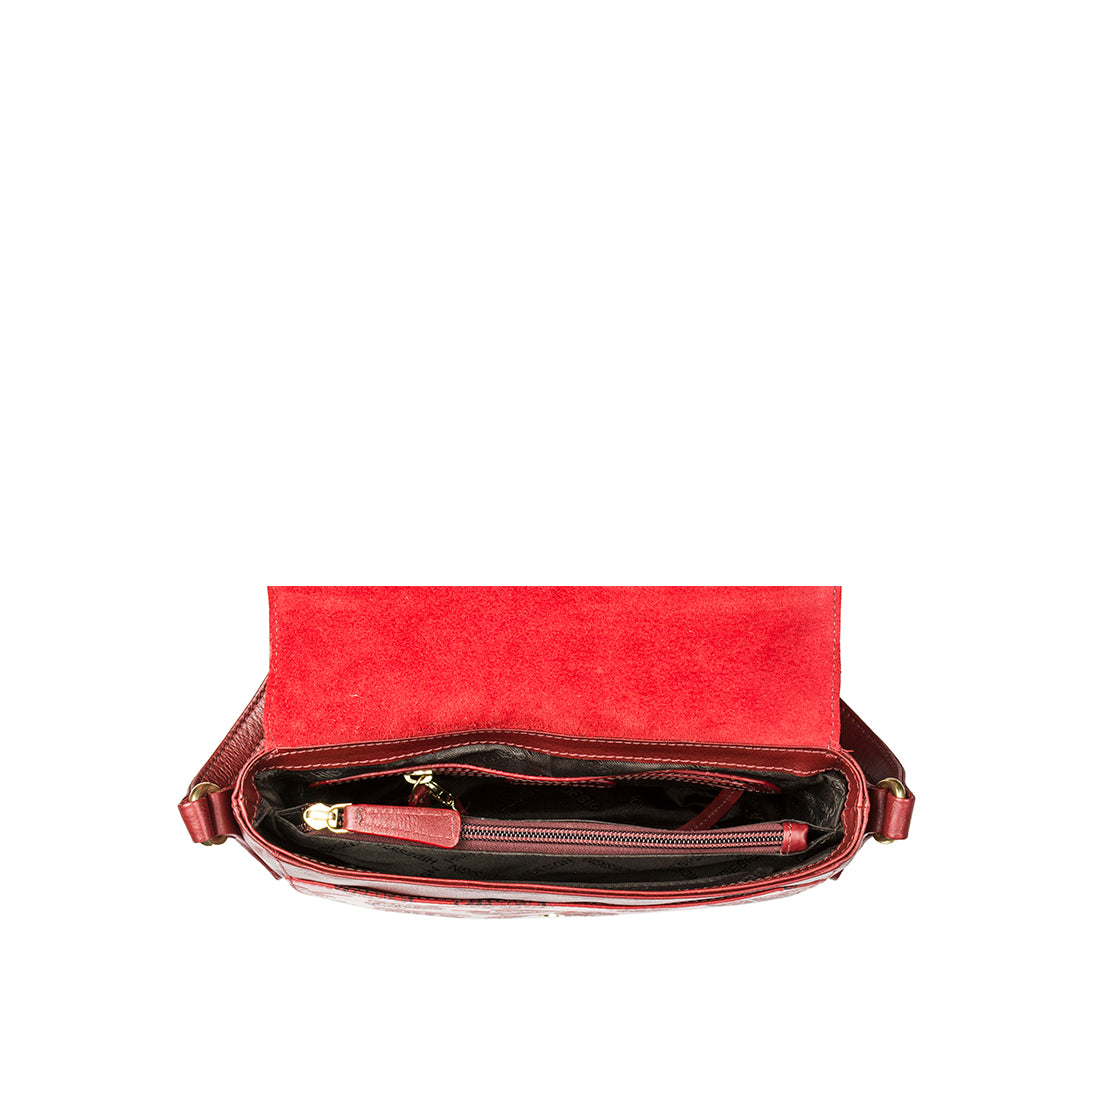 Buy Tan Meryl 01 Sling Bag Online - Hidesign